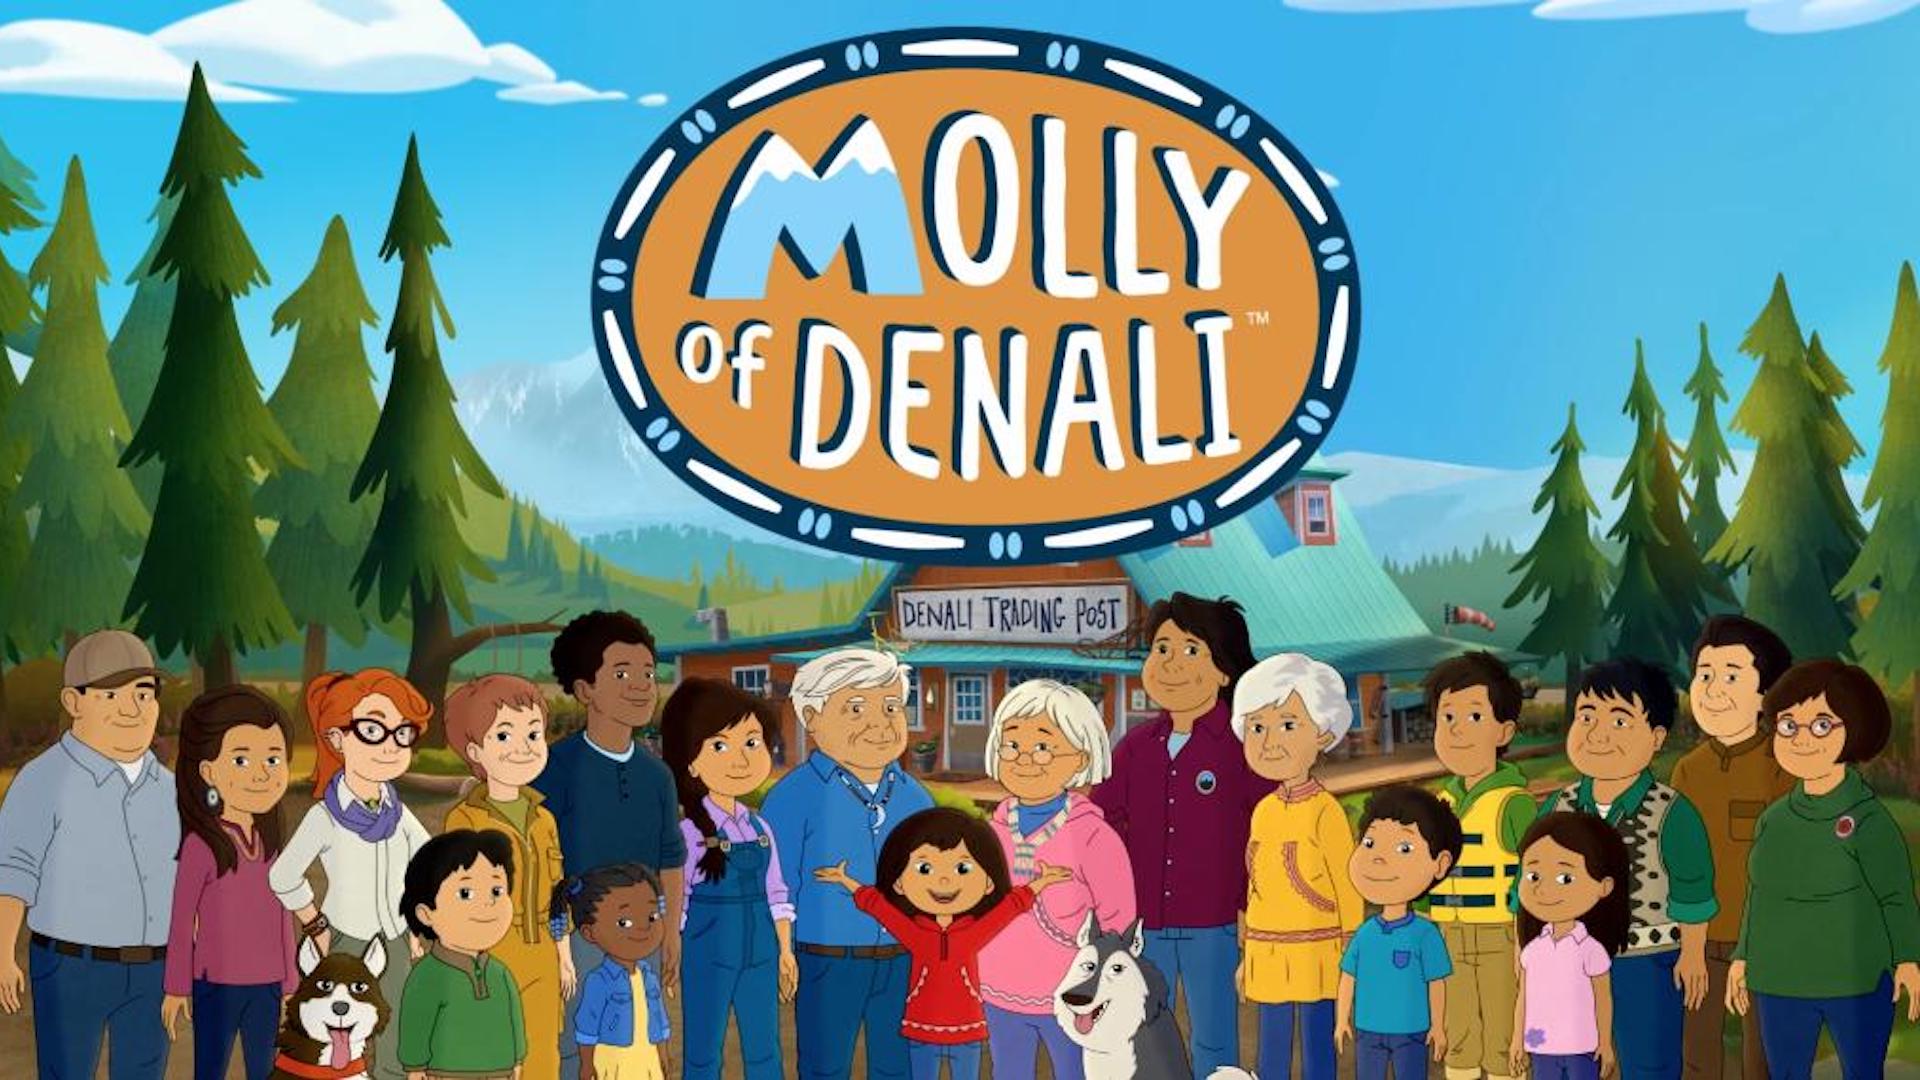 Molly of Denali.